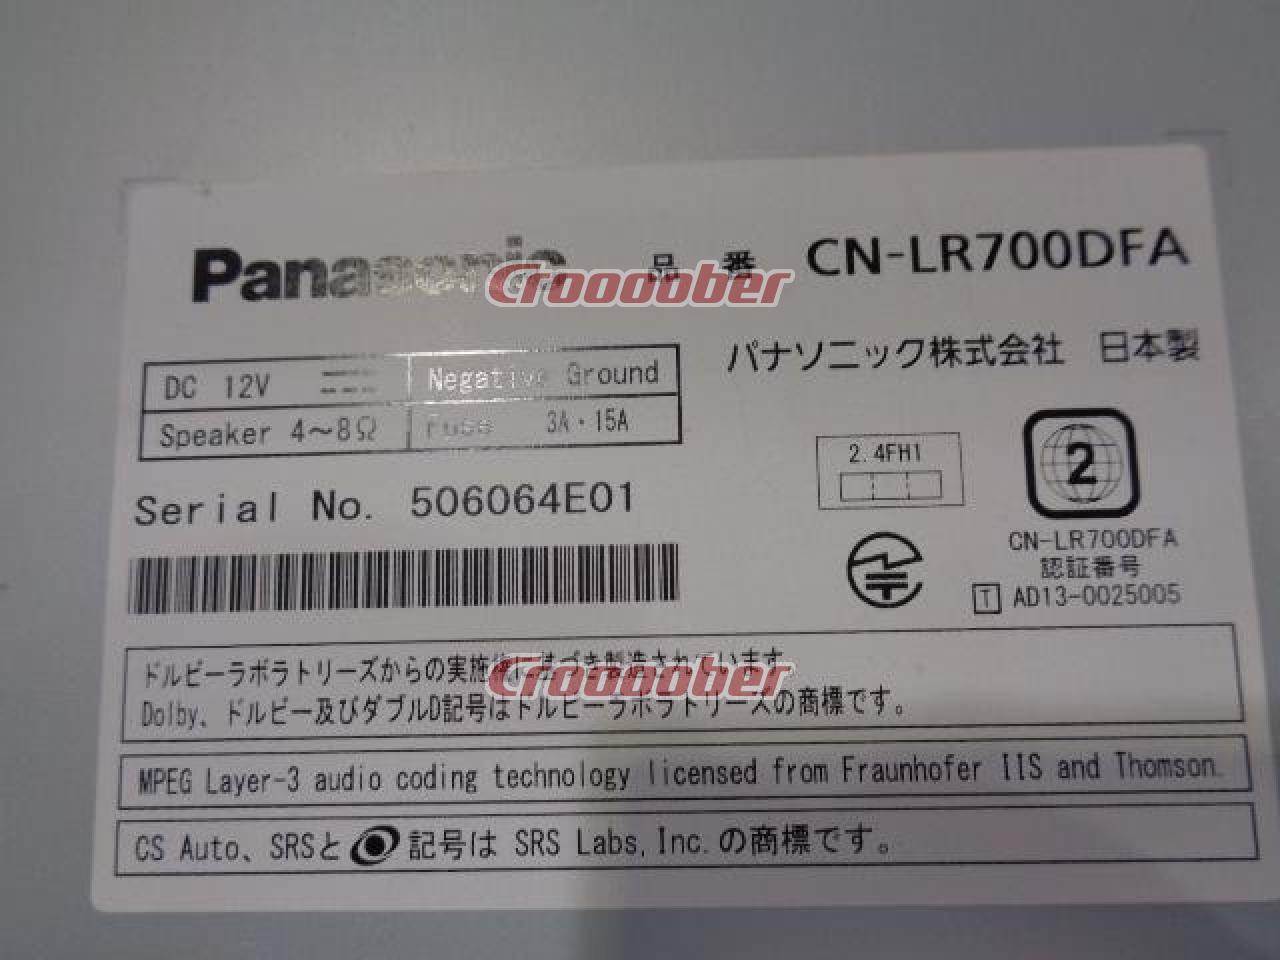 Subaru Genuine OP Panasonic Made CN-LR700DFA 2014 Model Year Built